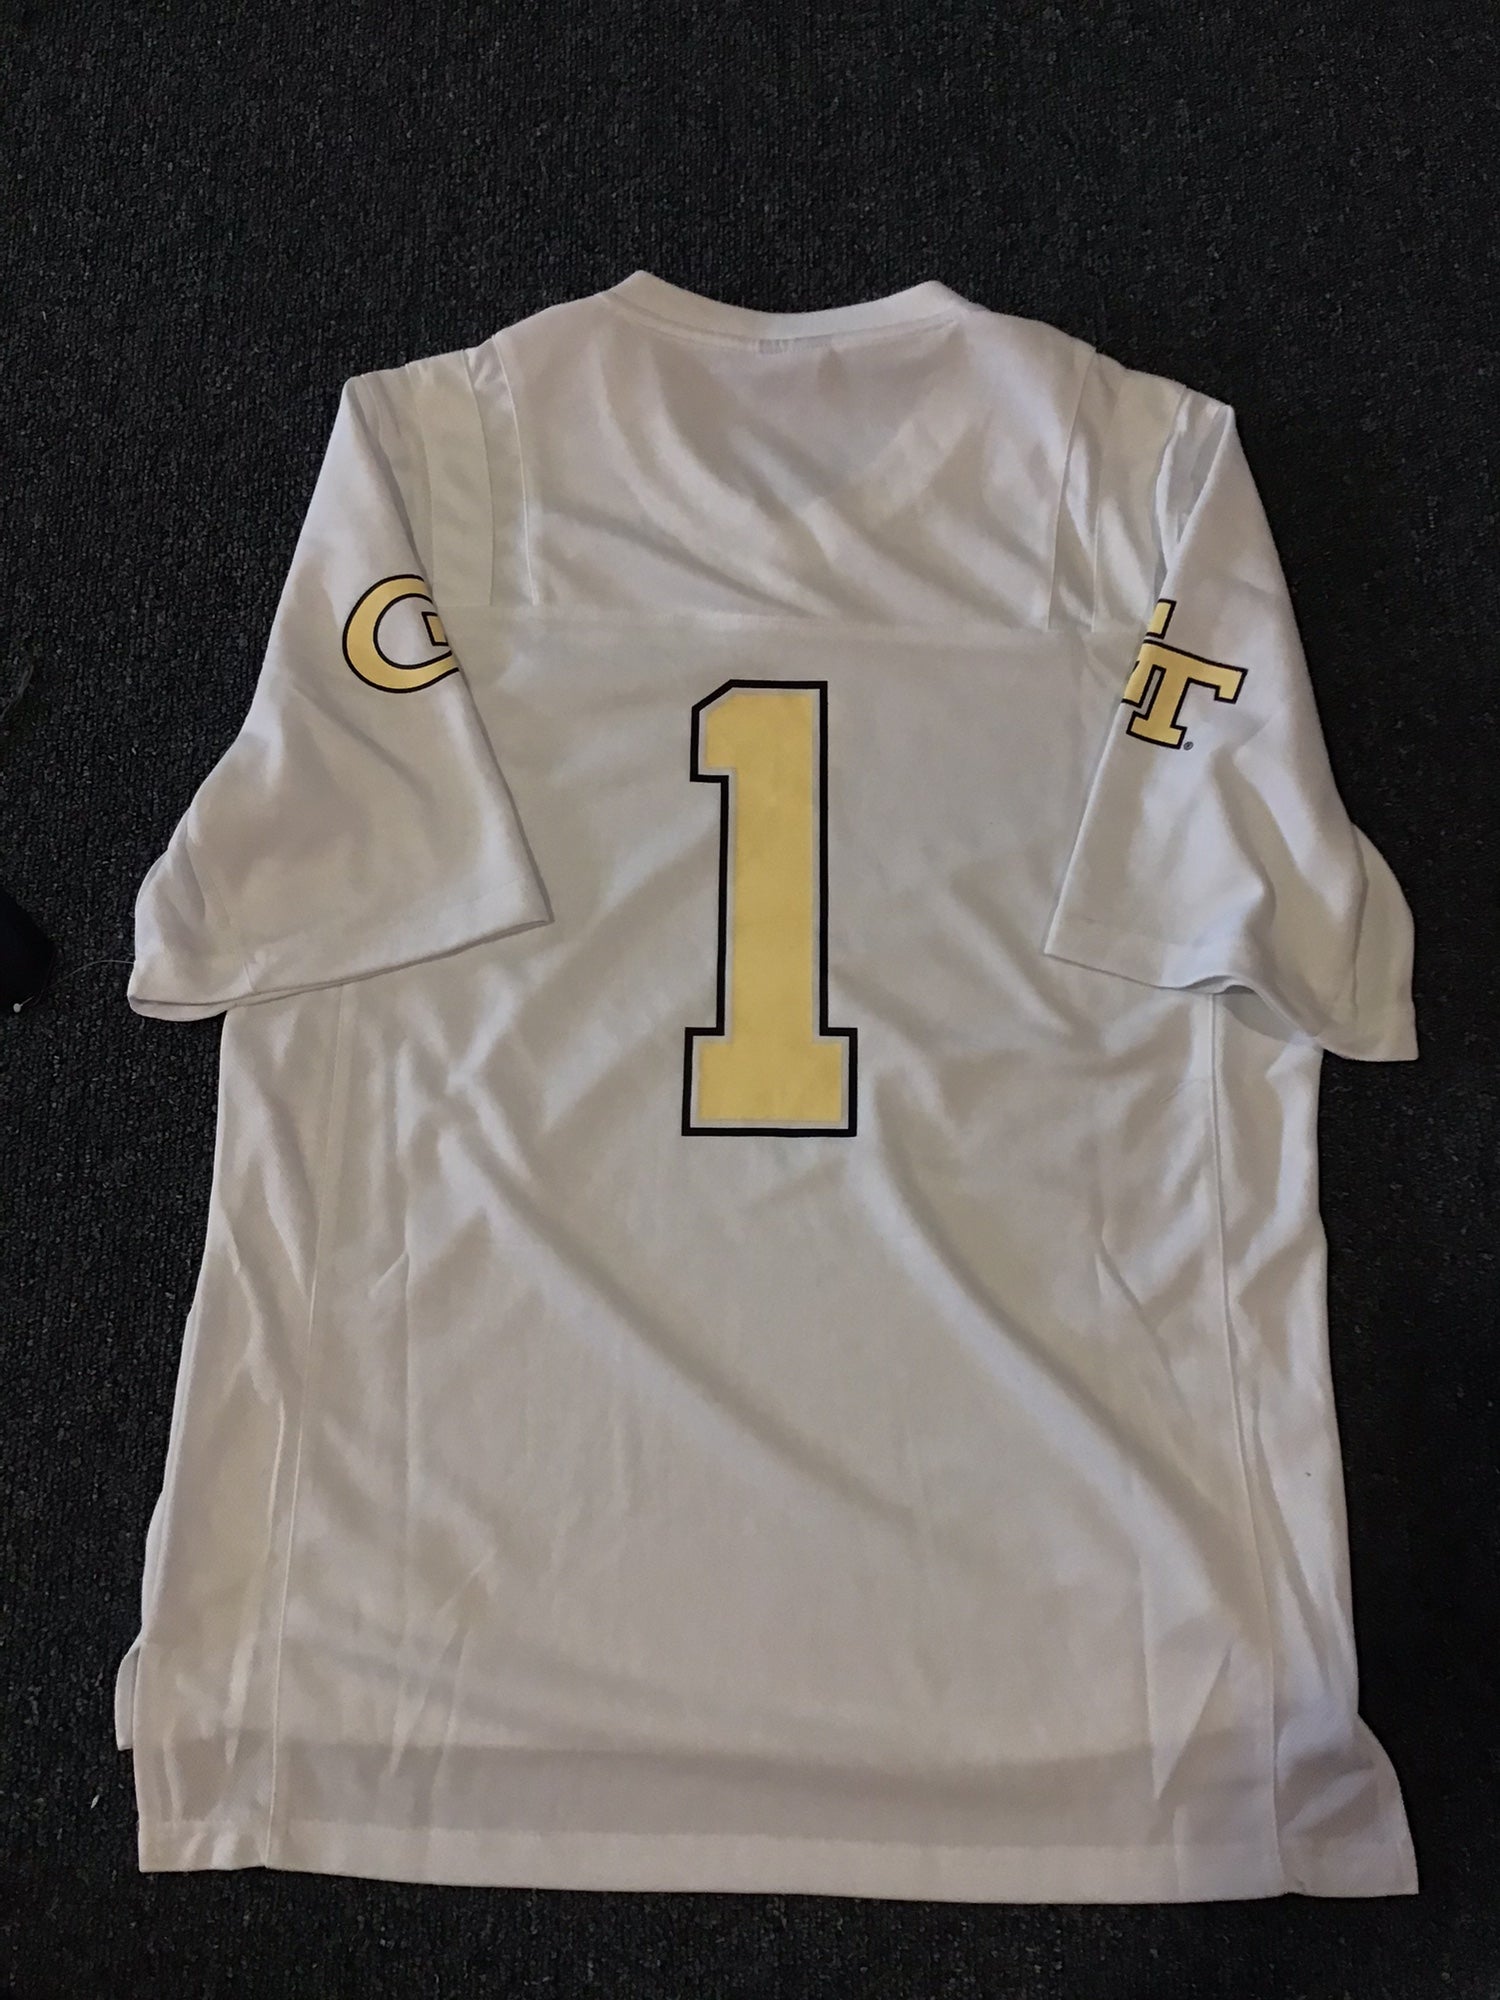 Men's adidas #21 White Georgia Tech Yellow Jackets Button-Up Baseball Jersey